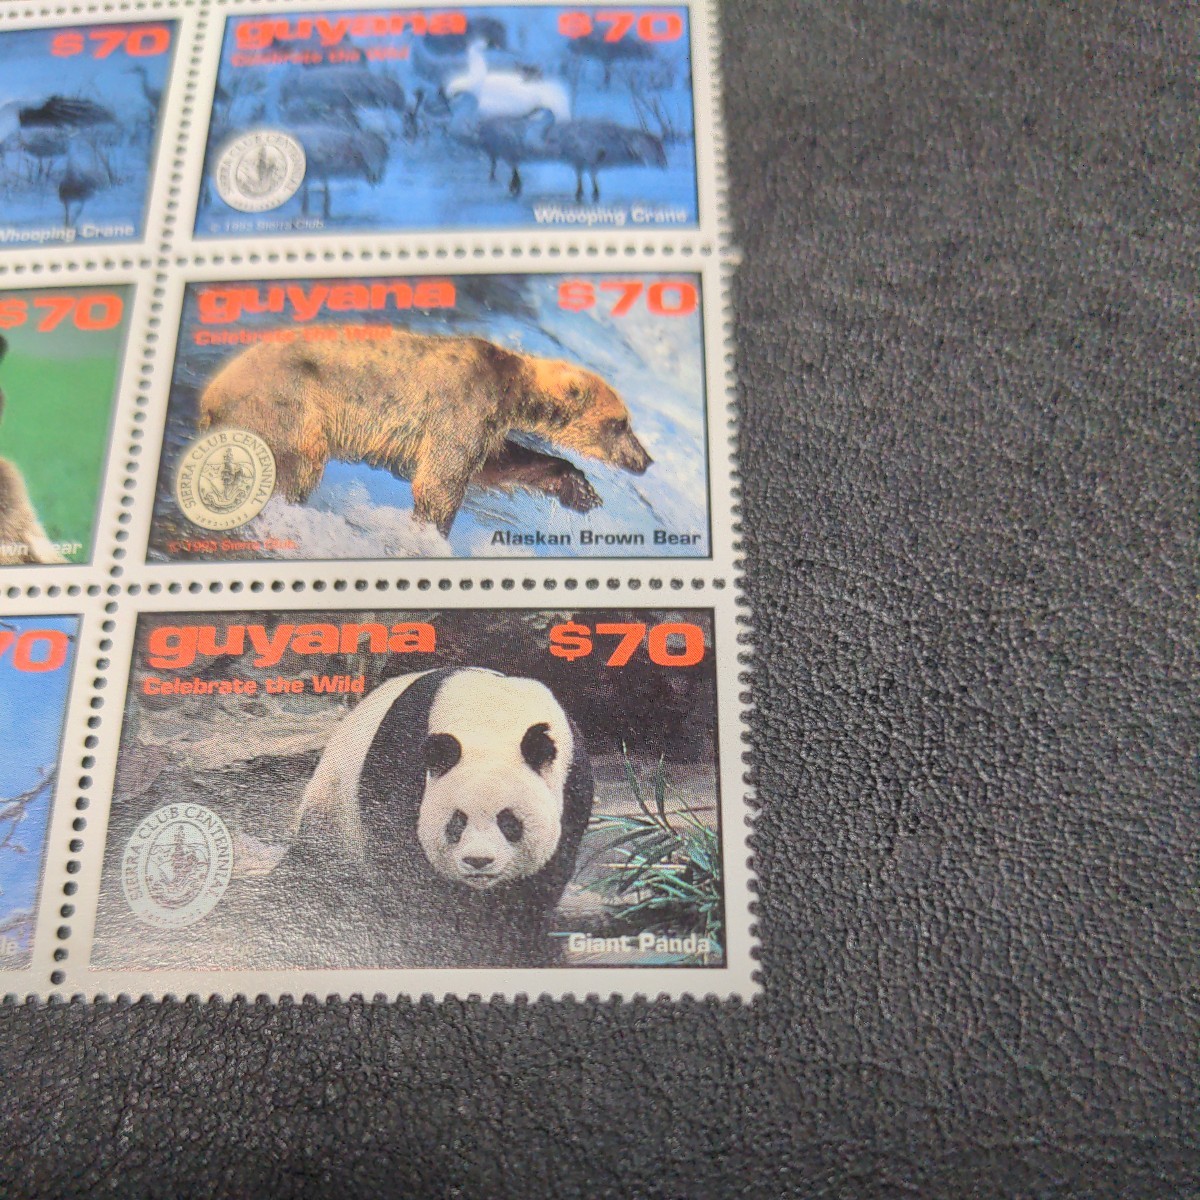  South America Gaya na. stamp [.. animal ] 8 kind stamp unused hinge trace equipped 